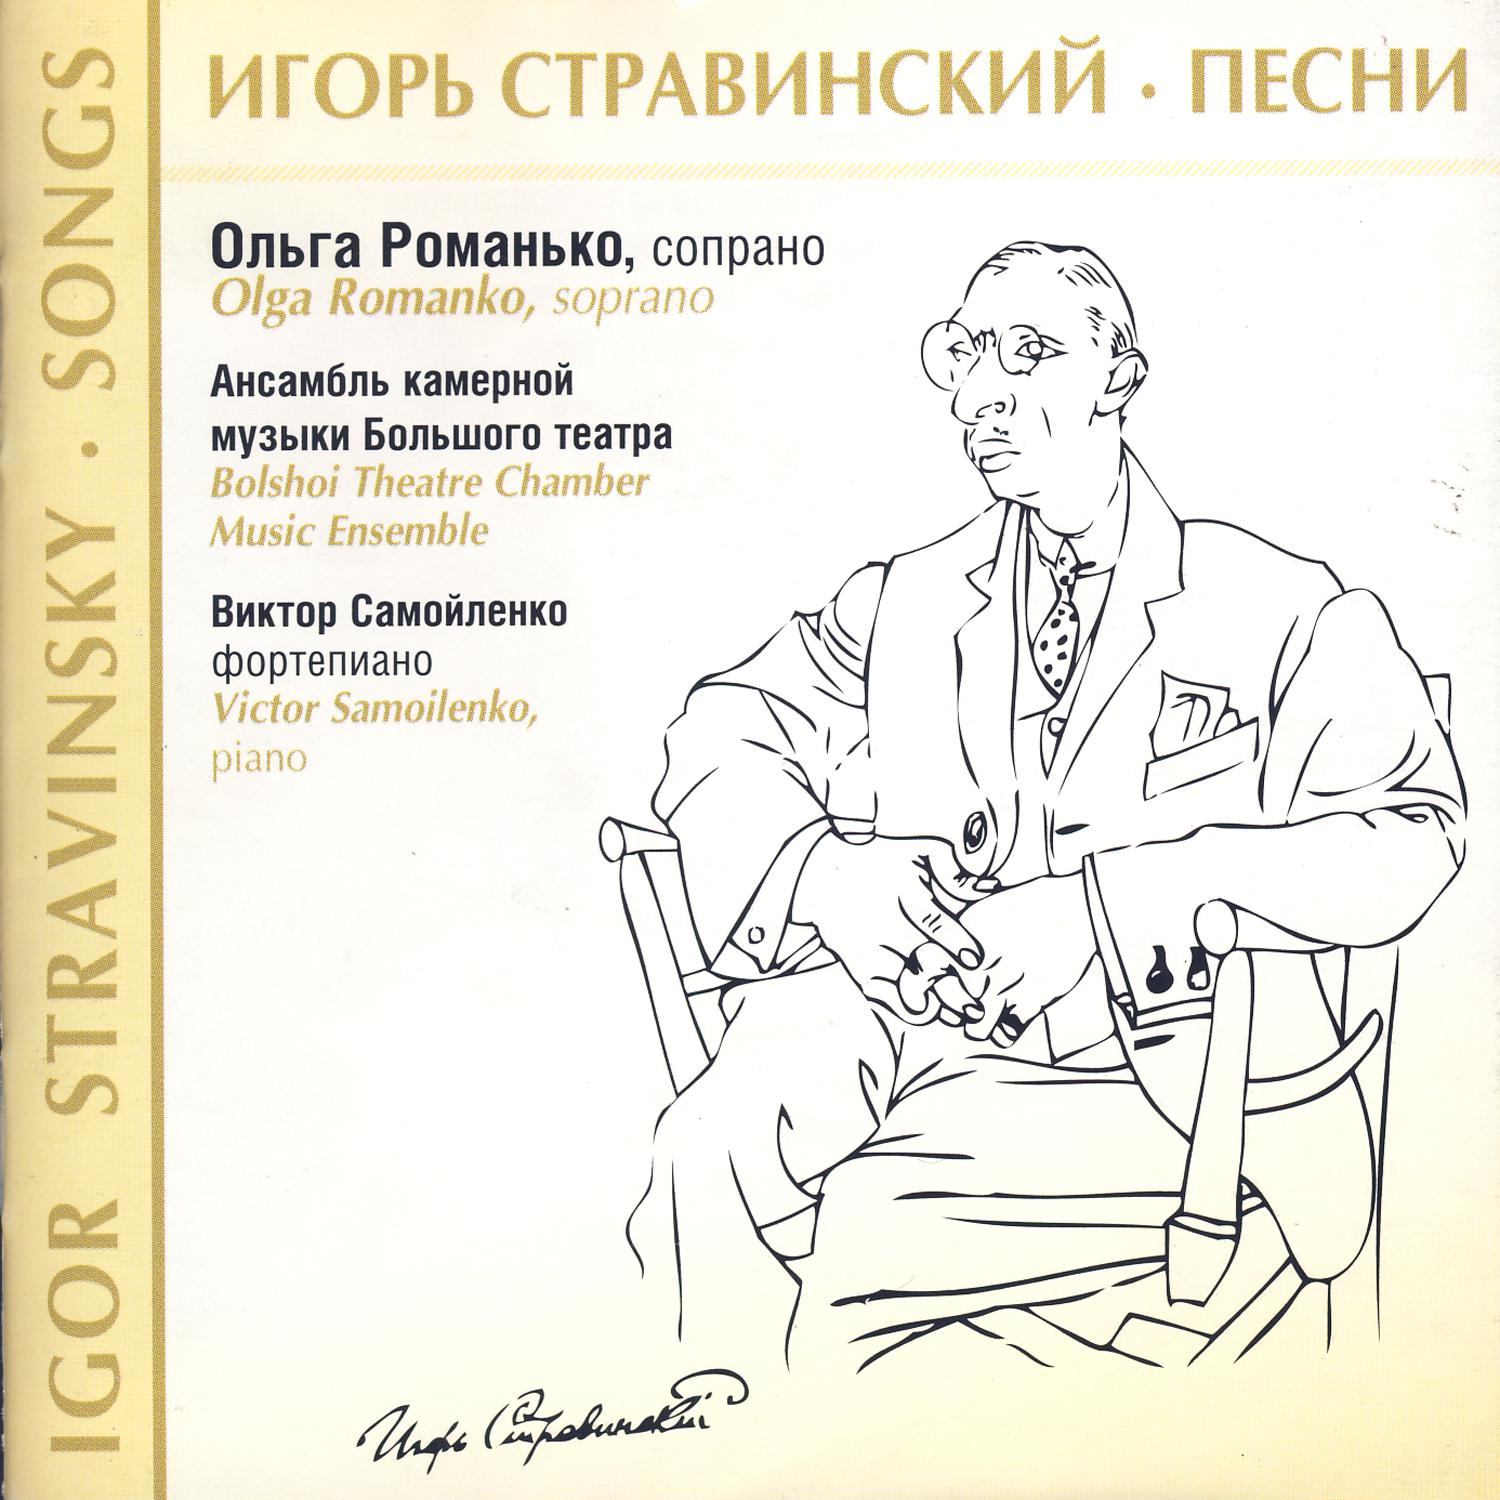 Bolshoi Theatre Chamber music Ensemble - Pastorale